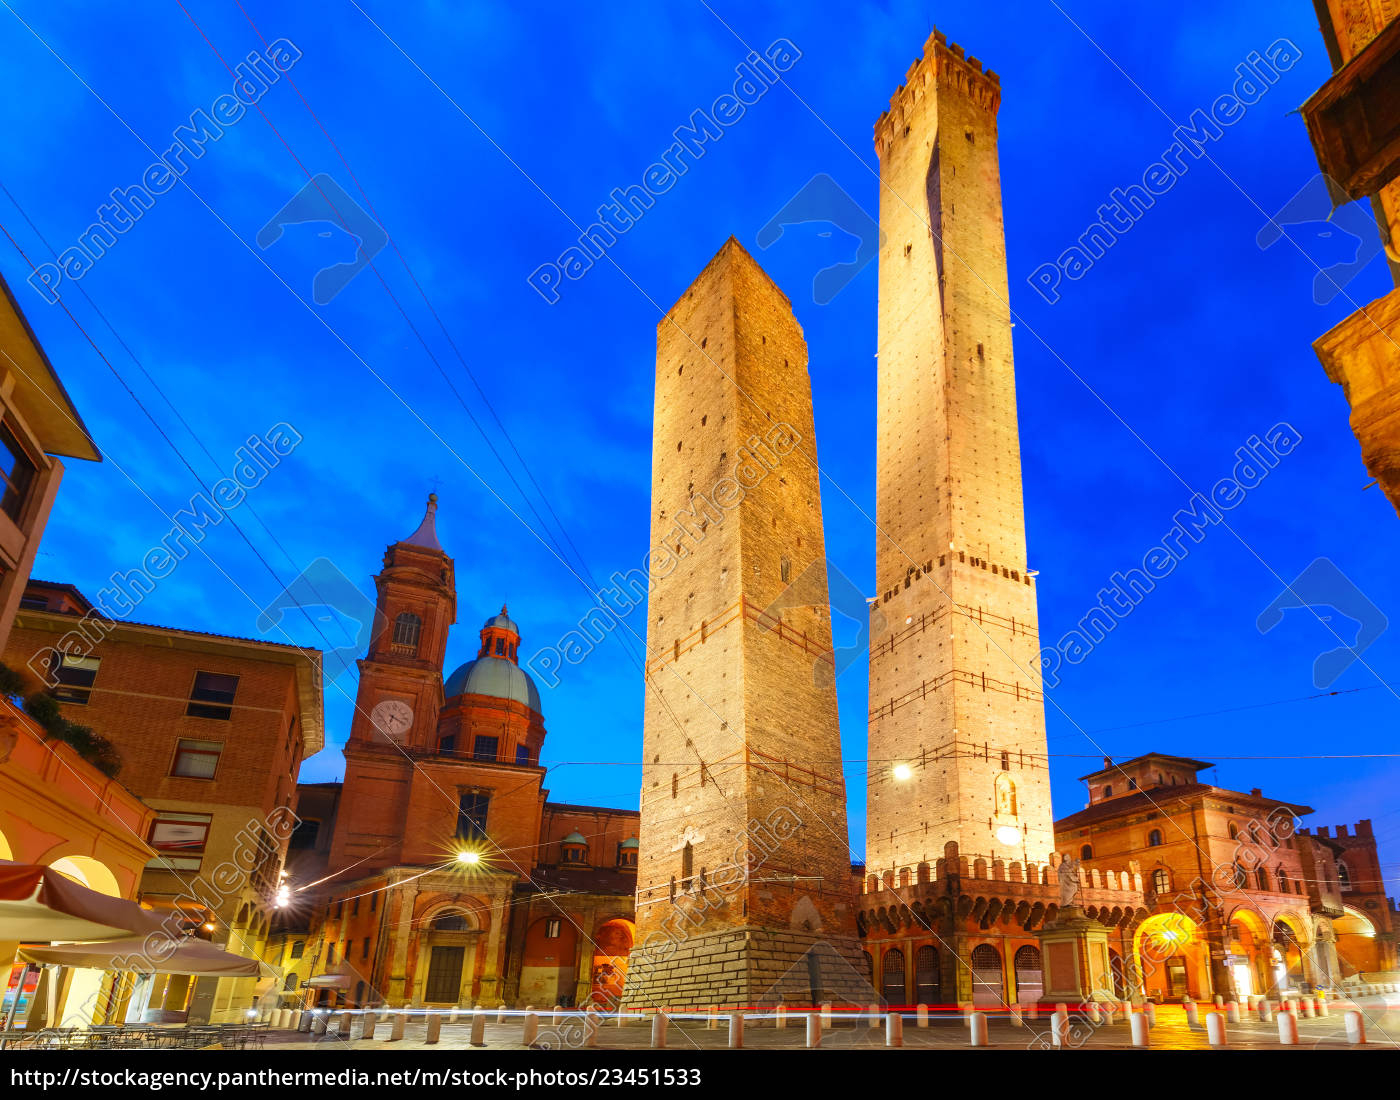 Lizenzfreies Bild 23451533 - Berühmte Zwei Türme Von Bologna In Der Nacht  Italien über Berühmte Türme